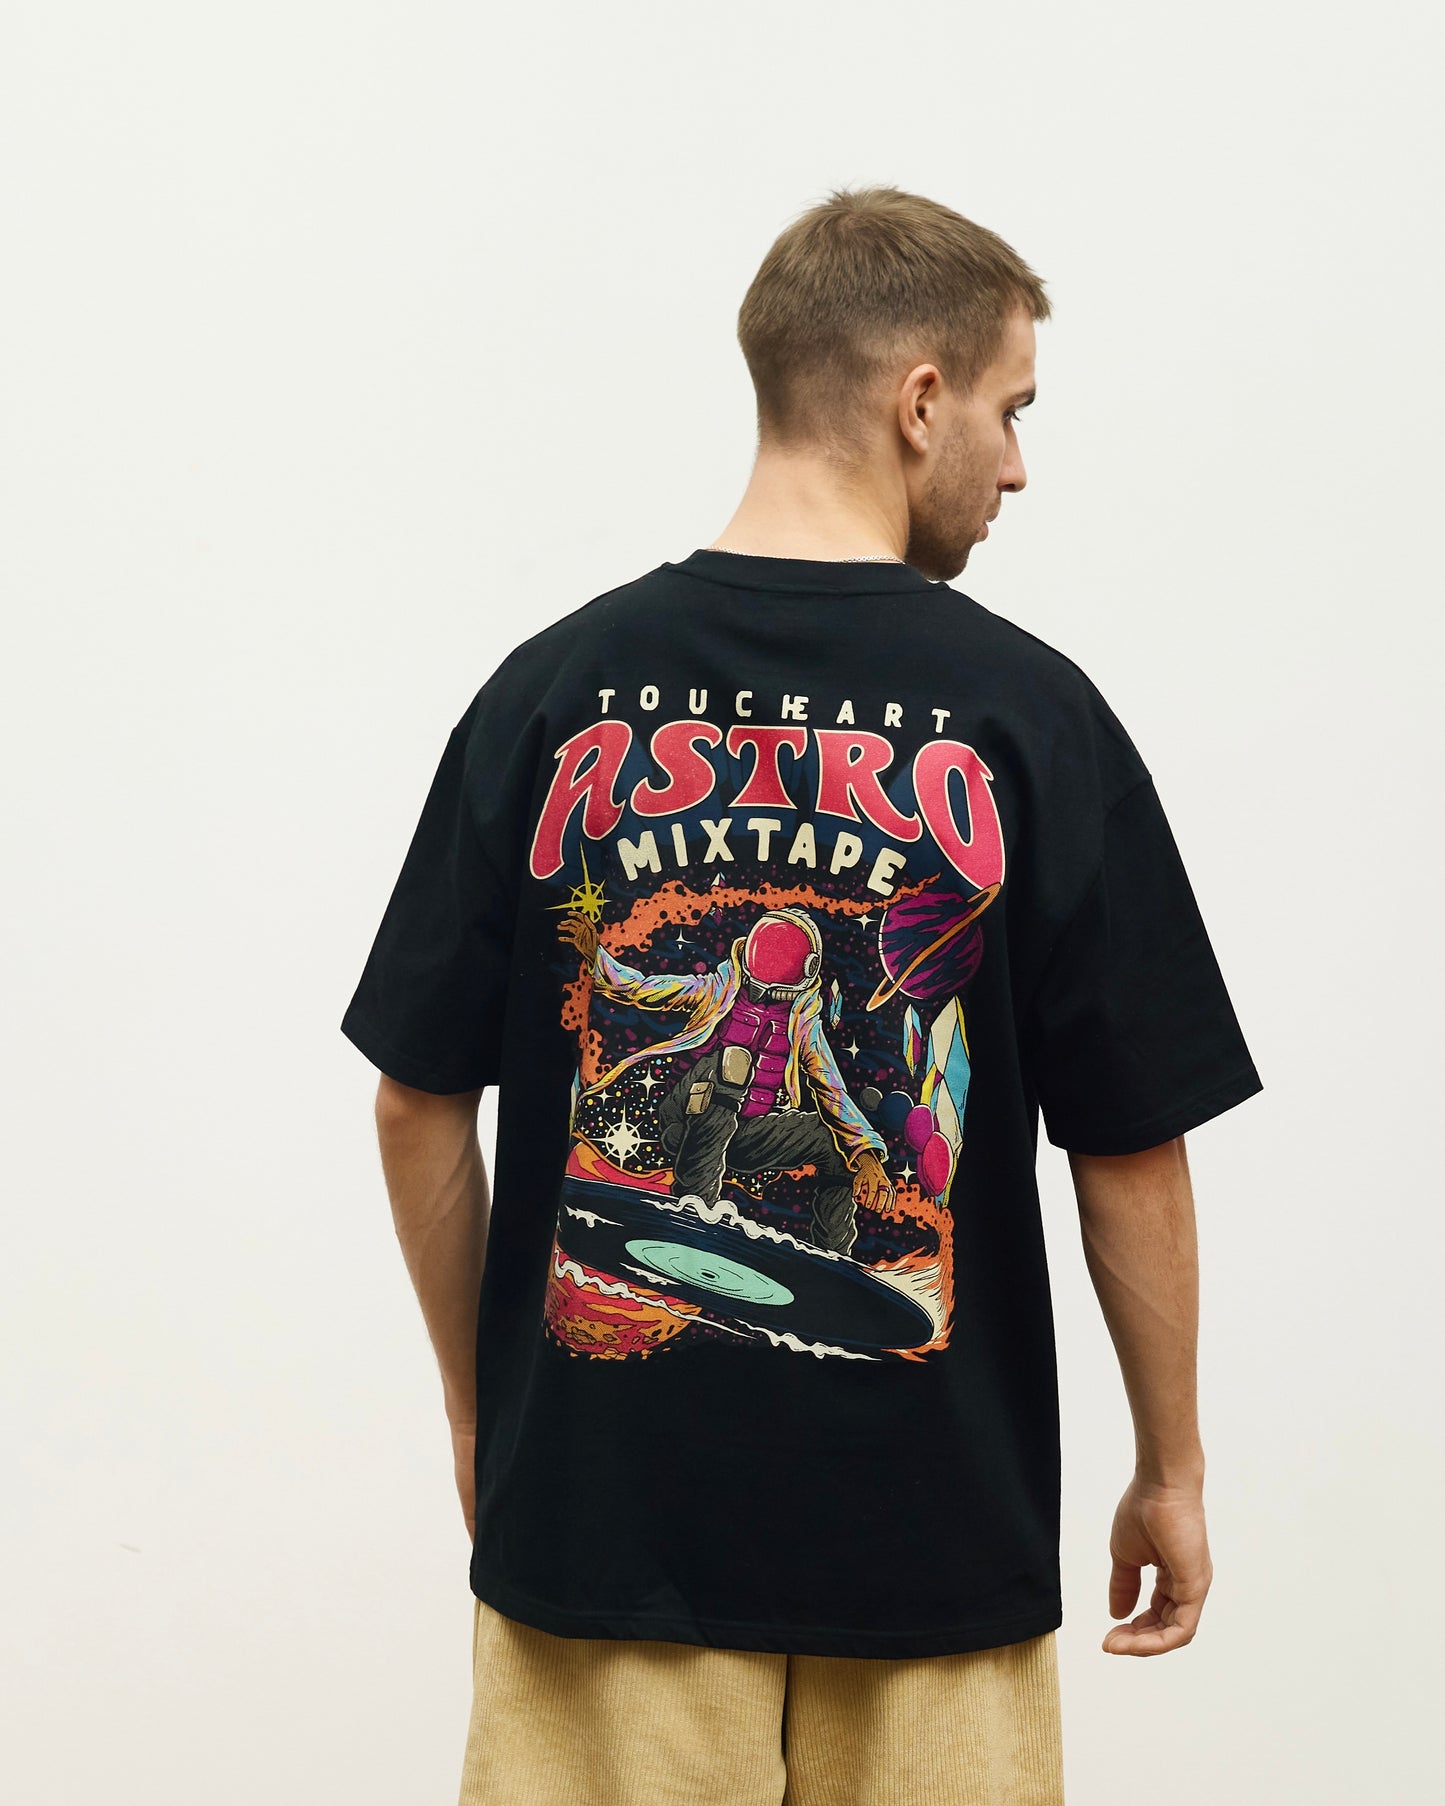 T-Shirt "Astro Mixtape" | Black